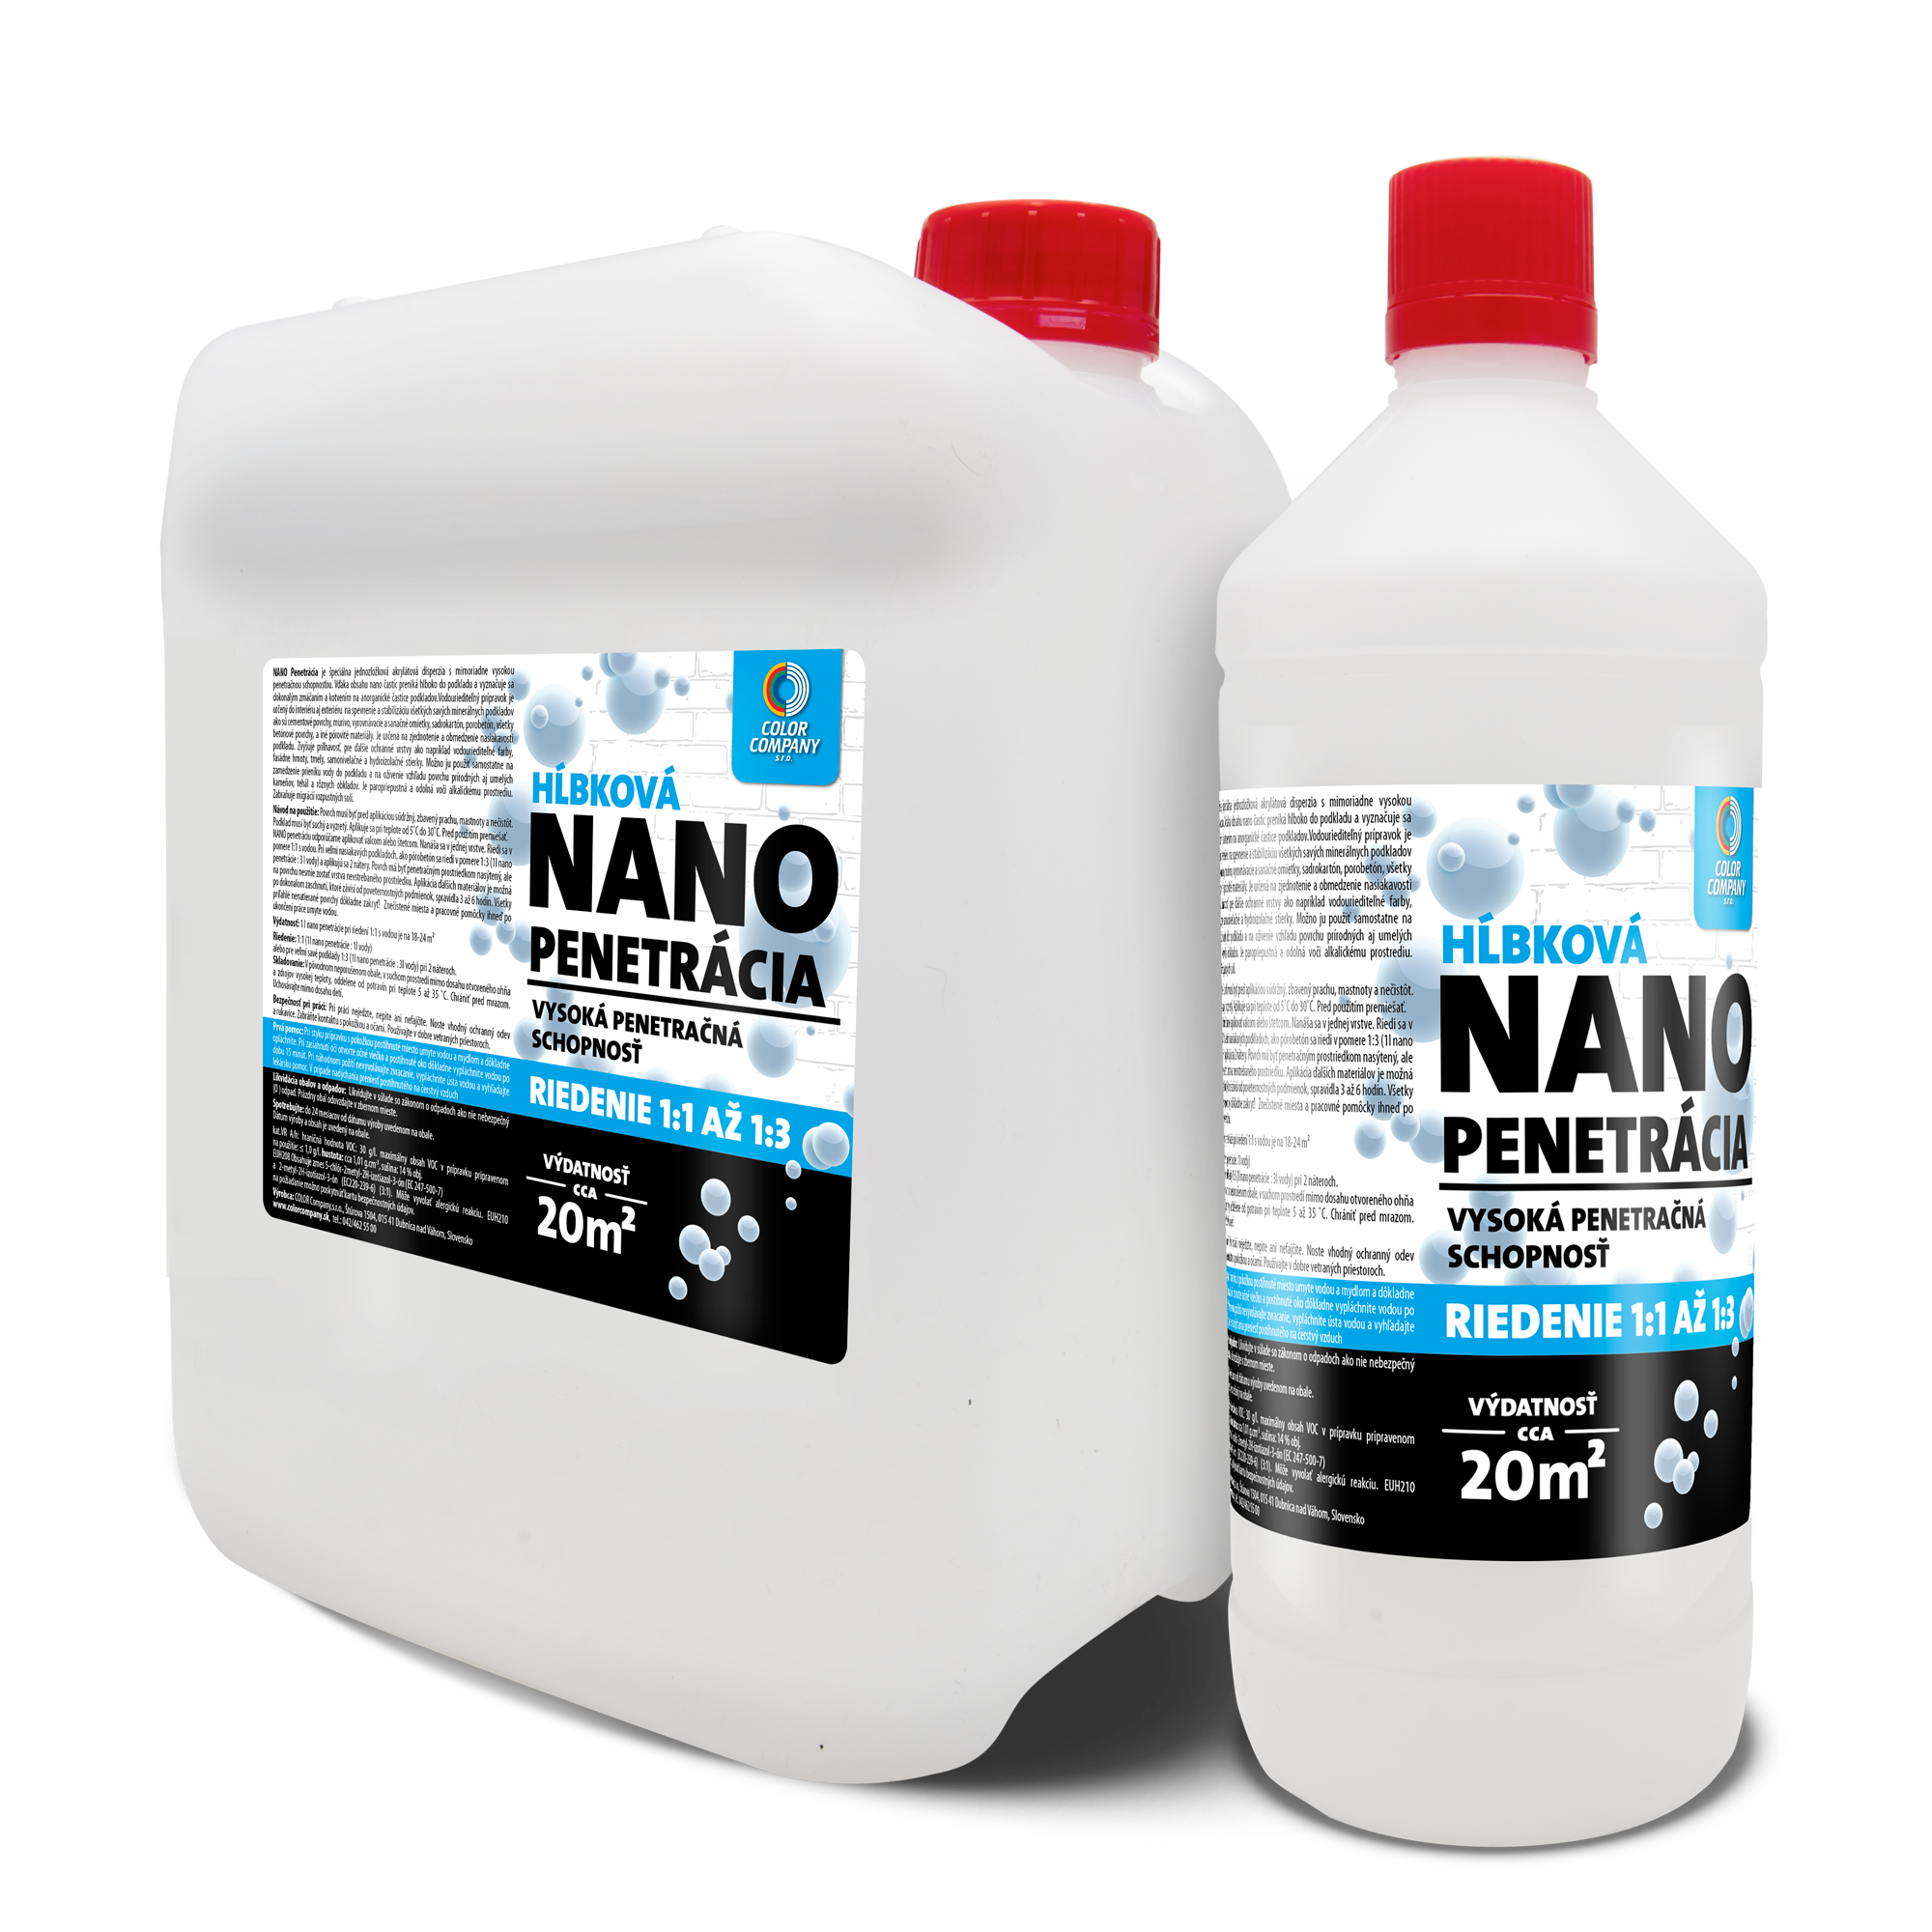 COLOR COMPANY Nano penetrácia 10L